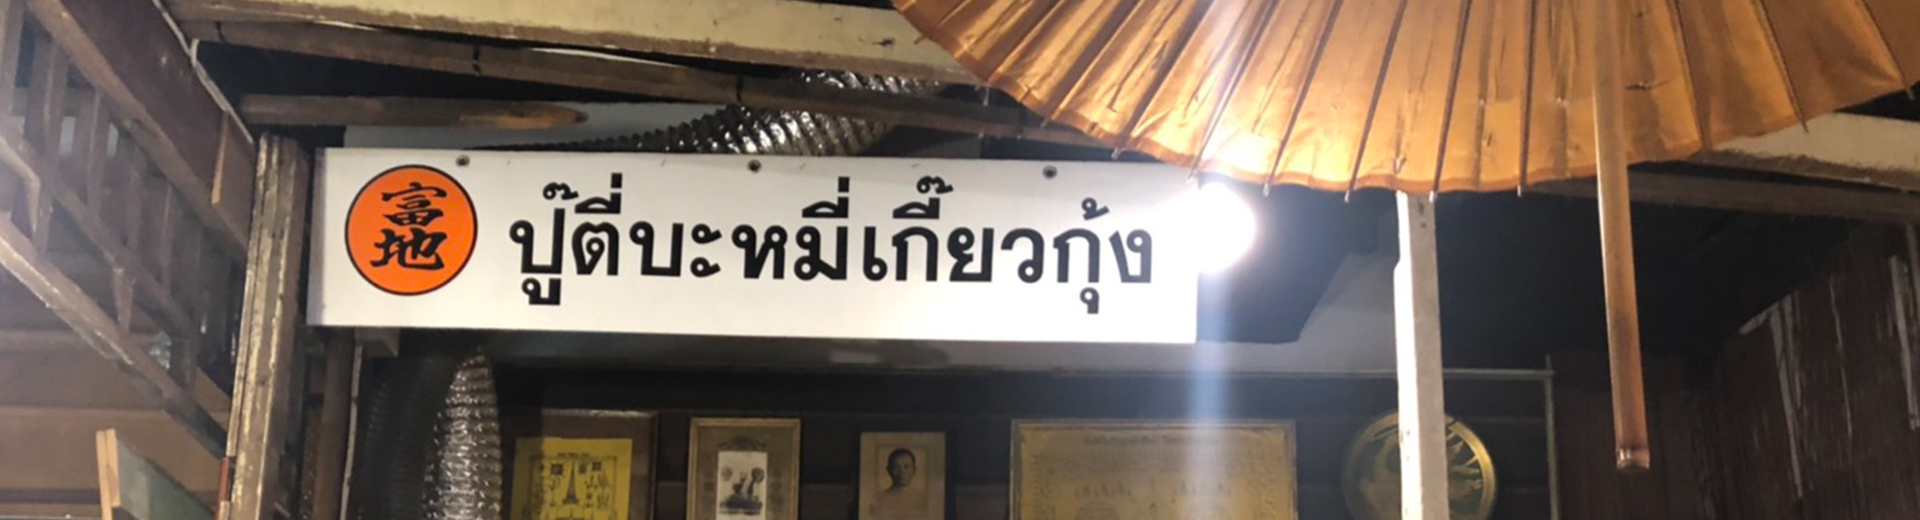 Shrimp Wonton Noodle- Bangkok